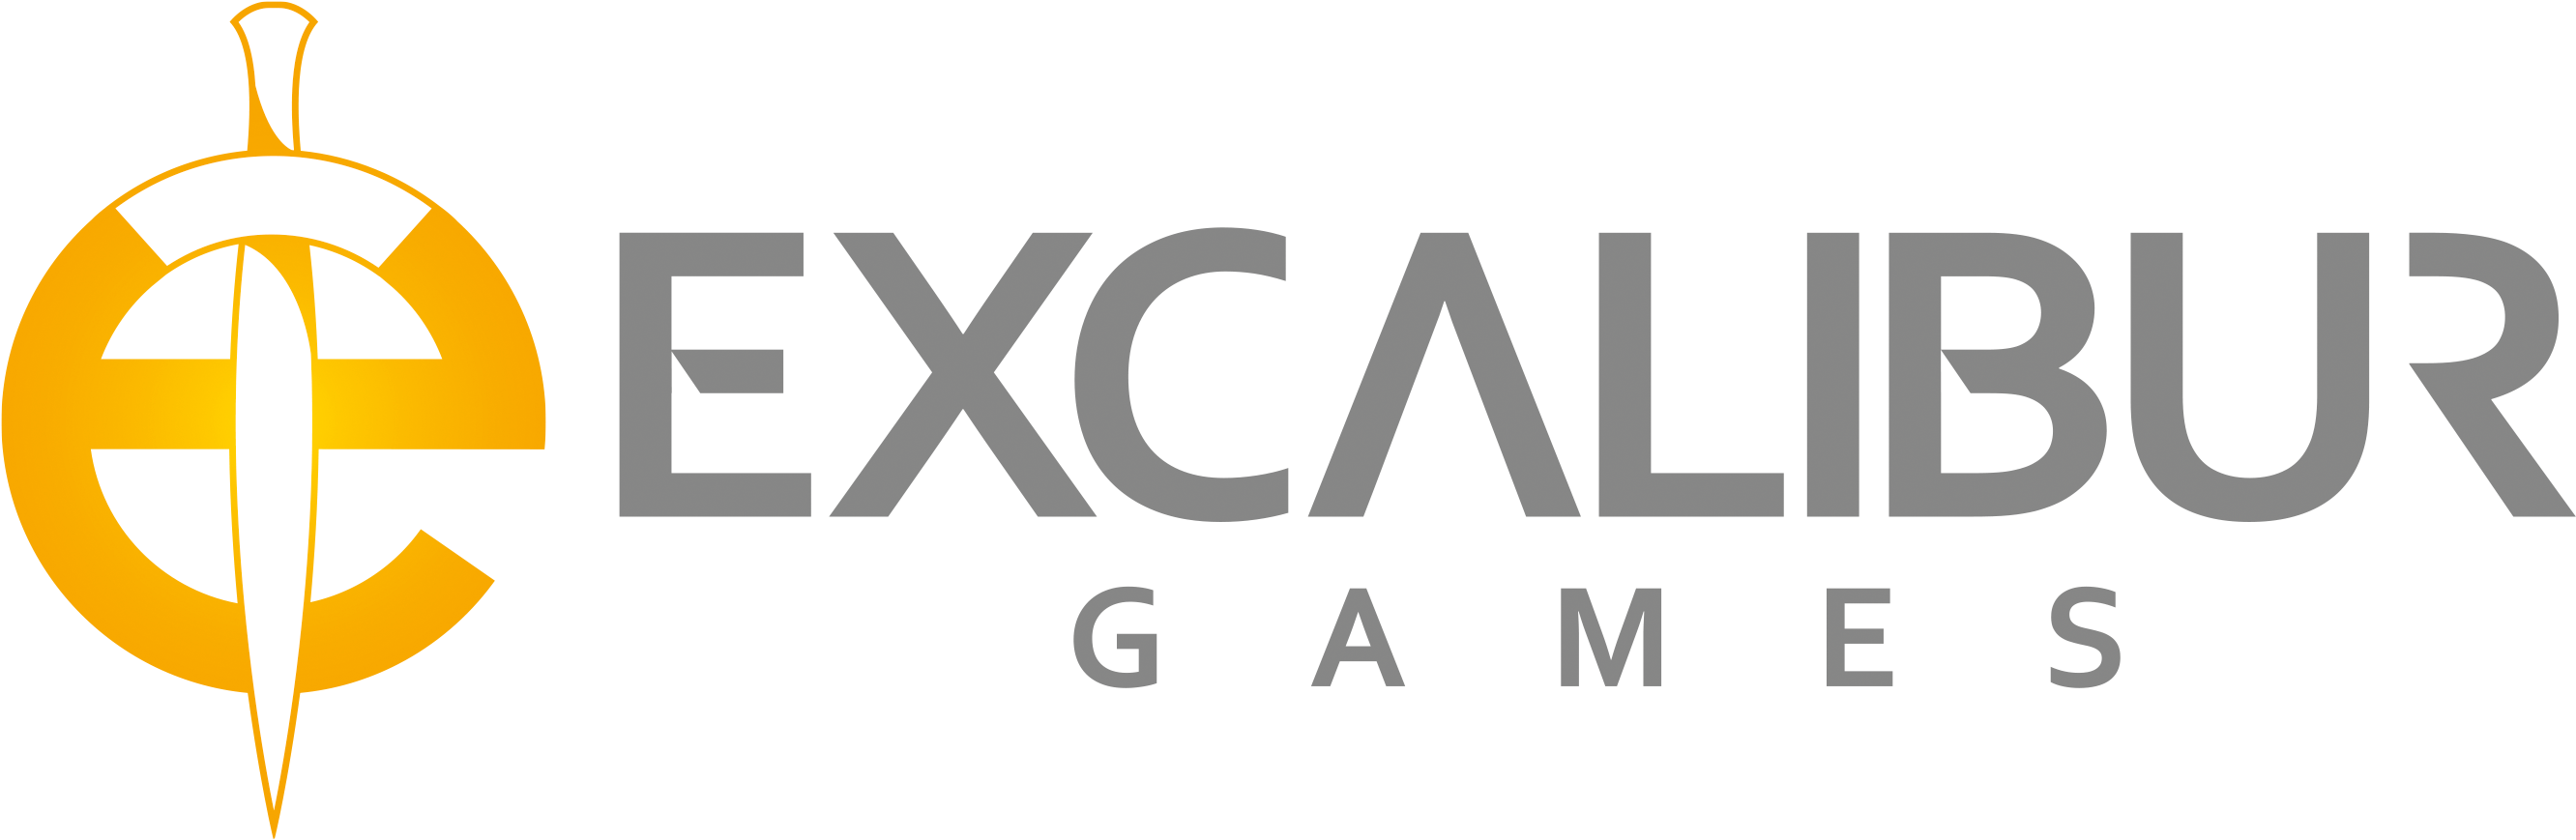 Excalibur Games - Excalibur Games Logo (3053x875), Png Download